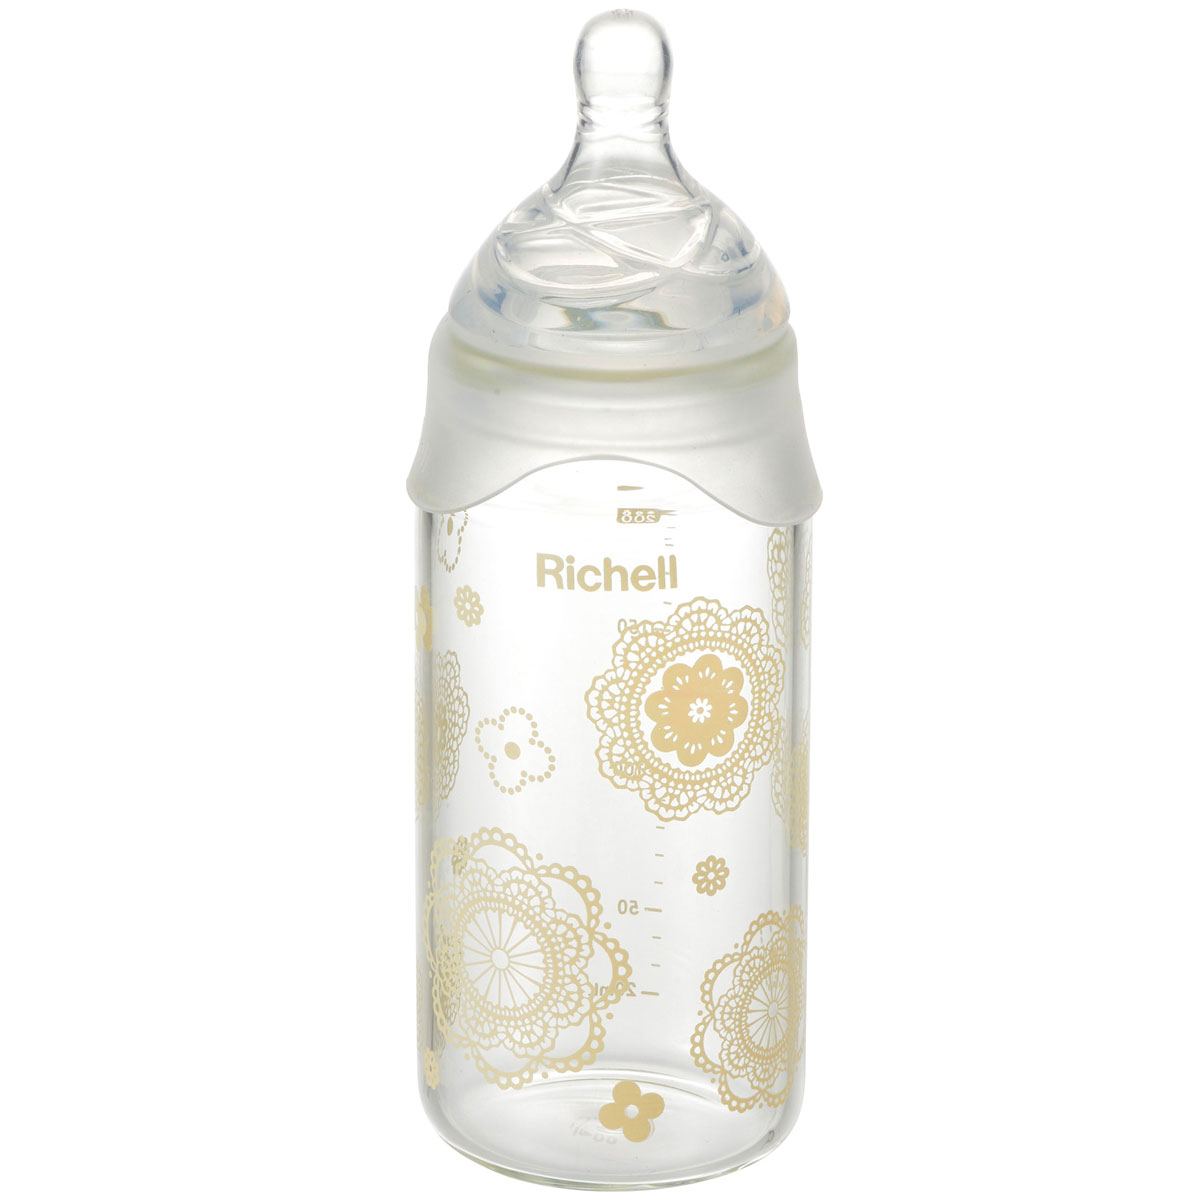 richell 利其爾藕池奶瓶耐熱玻璃奶瓶3-18個月左右